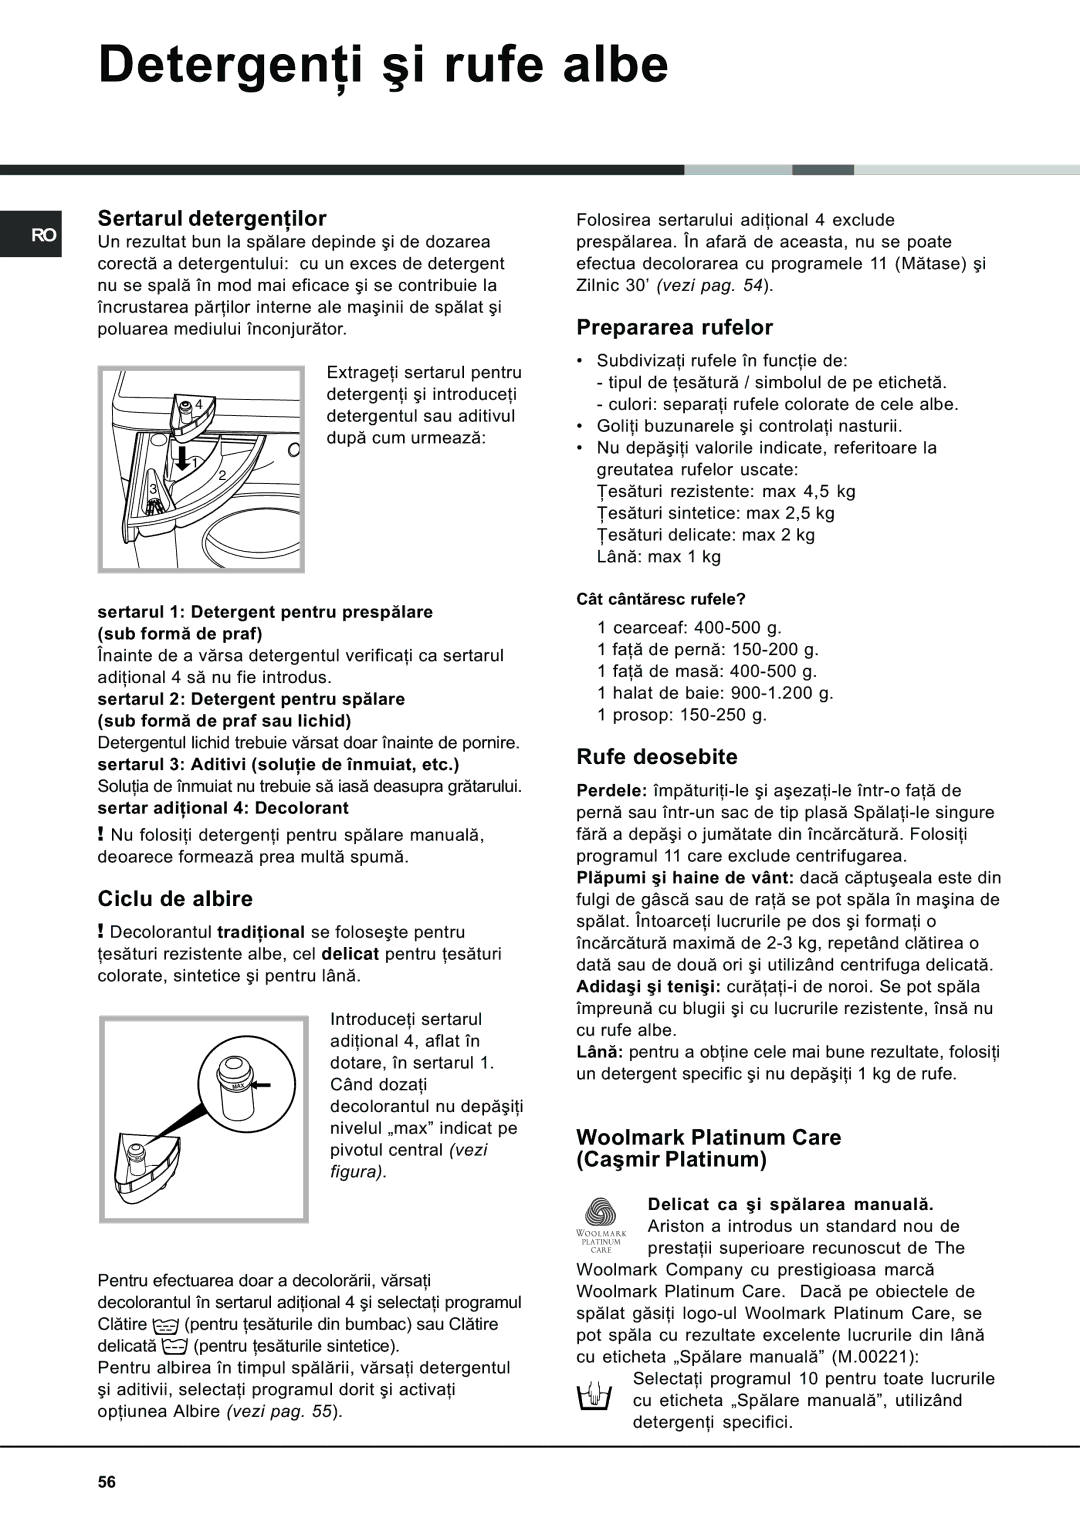 Ariston AVSD 109 manual Detergenþi ºi rufe albe 